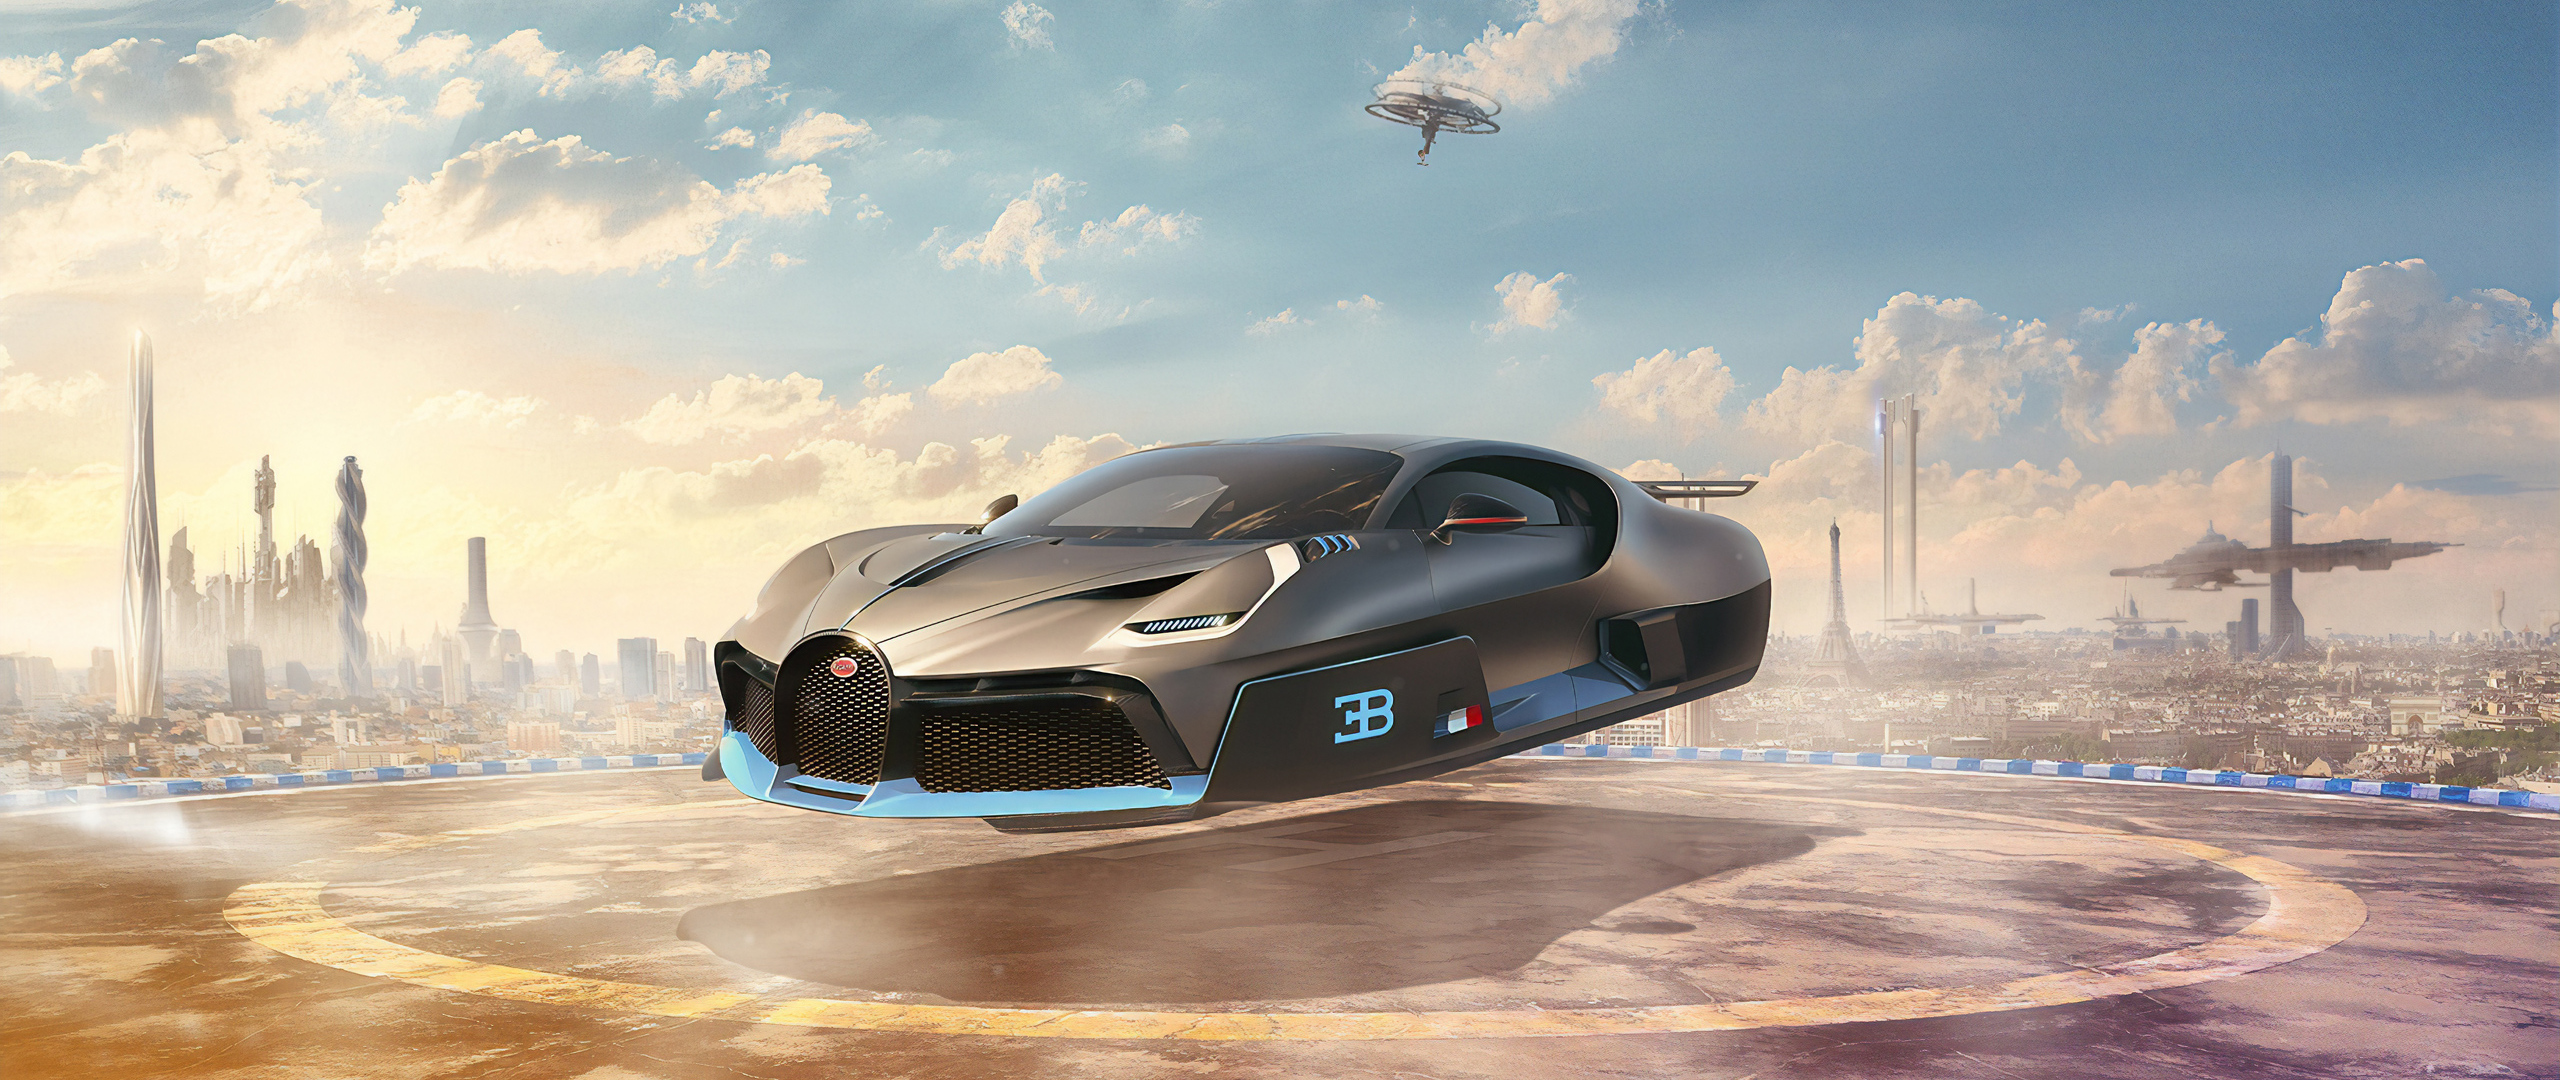 Bugatti 2050 In 2560x1080 Resolution. bugatti-2050-8p.jpg. 